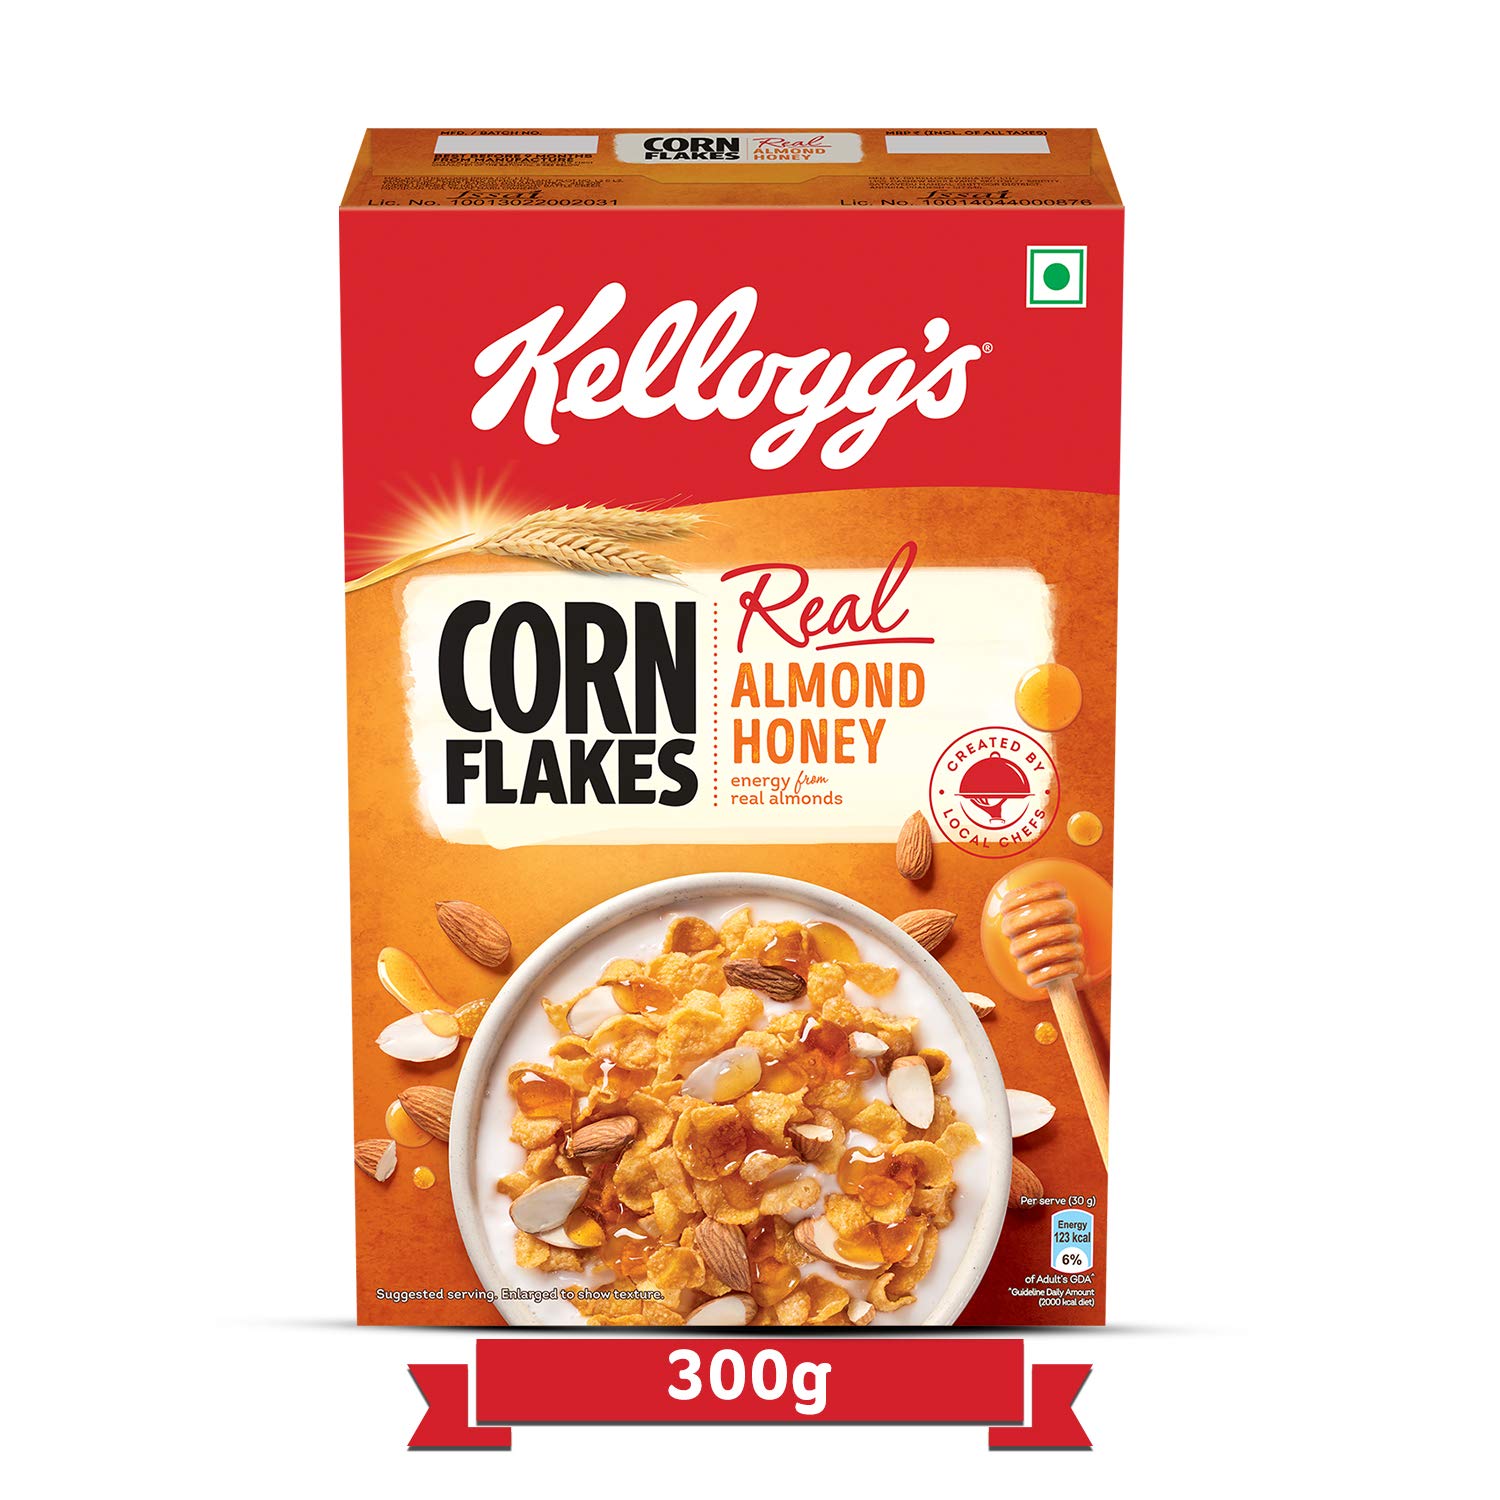 Kellogg’s Corn Flakes Real Almond and Honey 300g